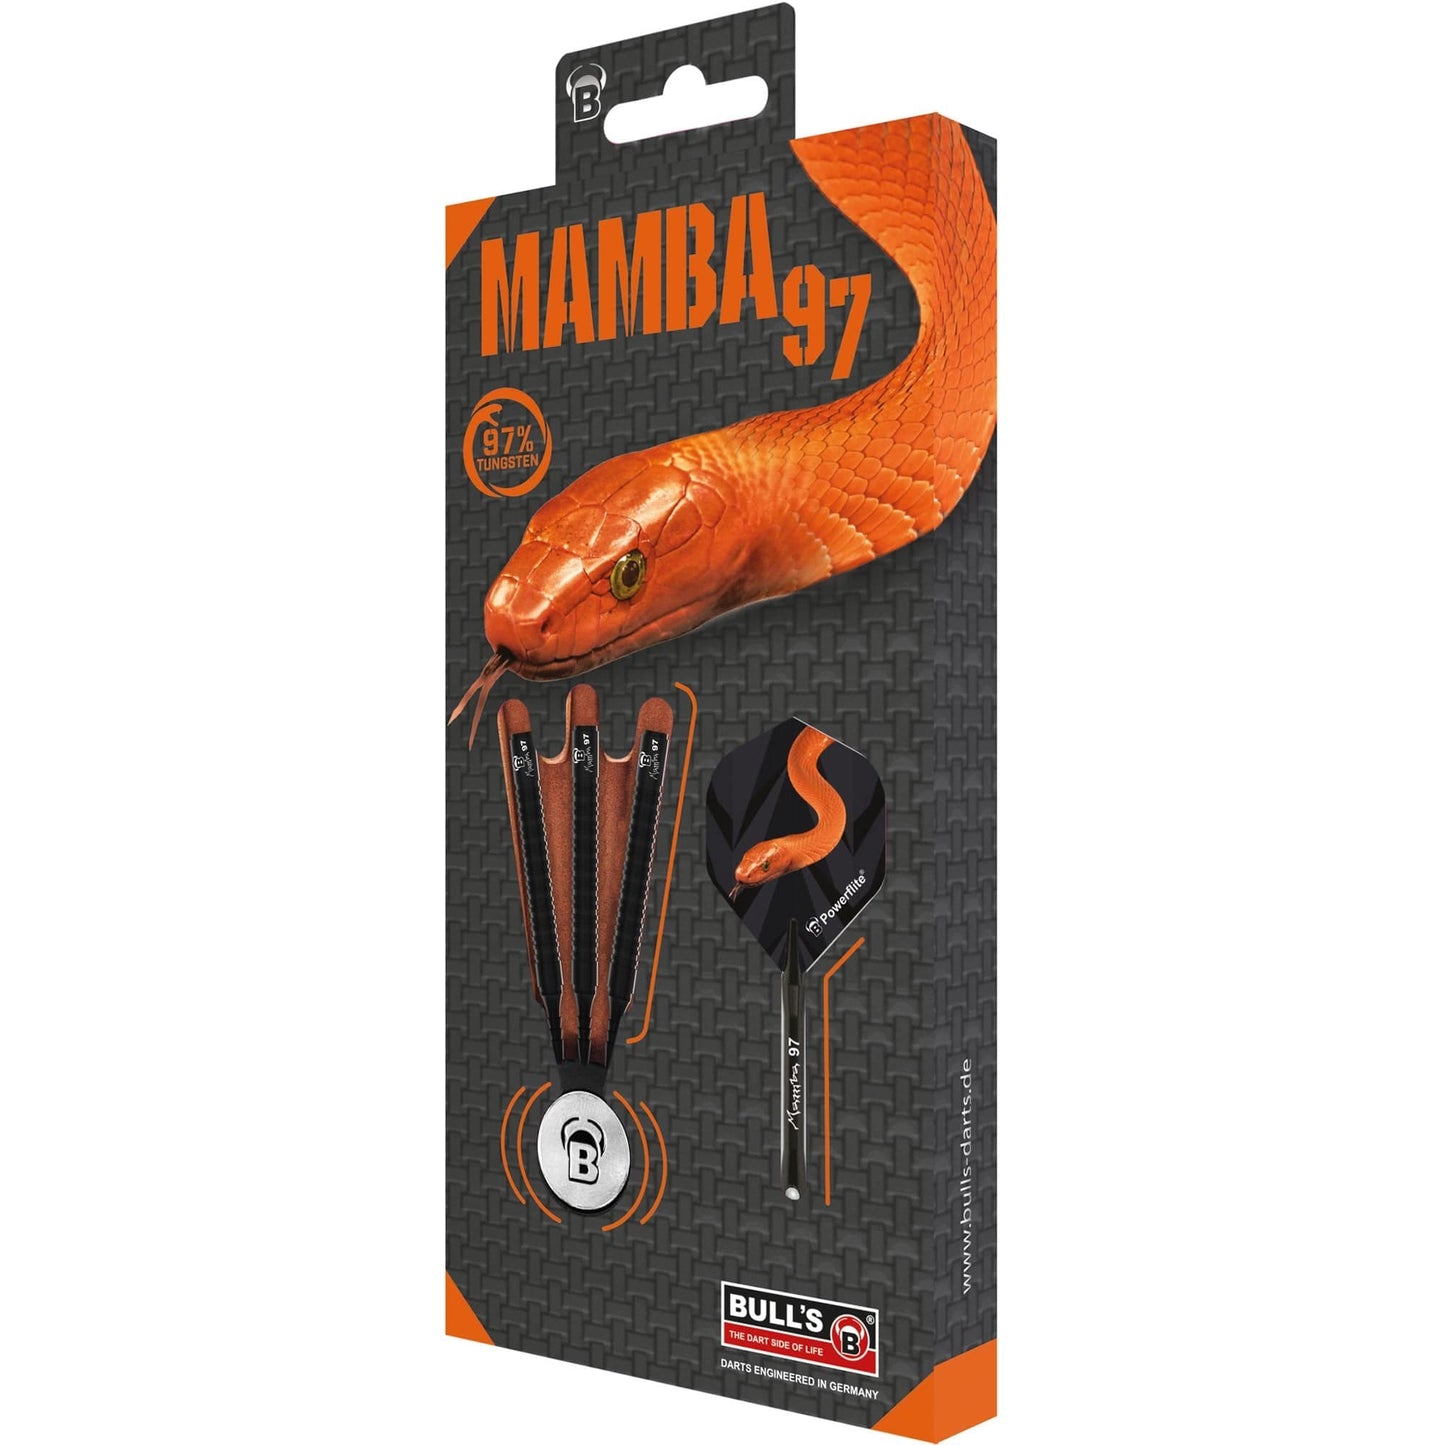 BULL'S Mamba 97 Darts - Soft Tip - M2 - Black Titanium